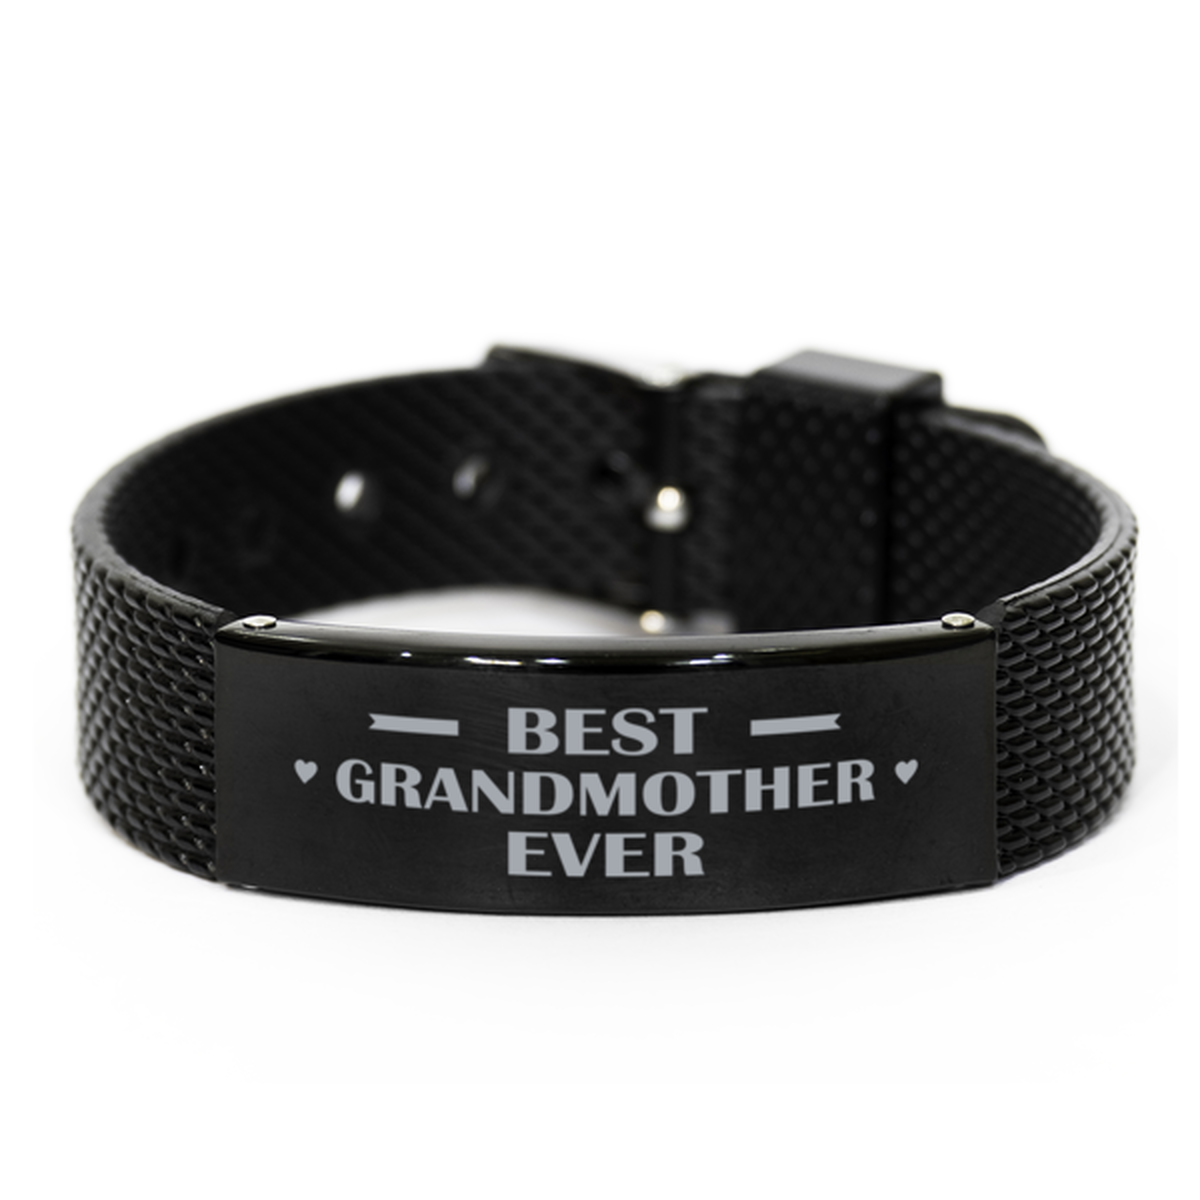 Best Grandmother Ever Grandmother Gifts, Gag Engraved Bracelet For Grandmother, Best Family Gifts For Women